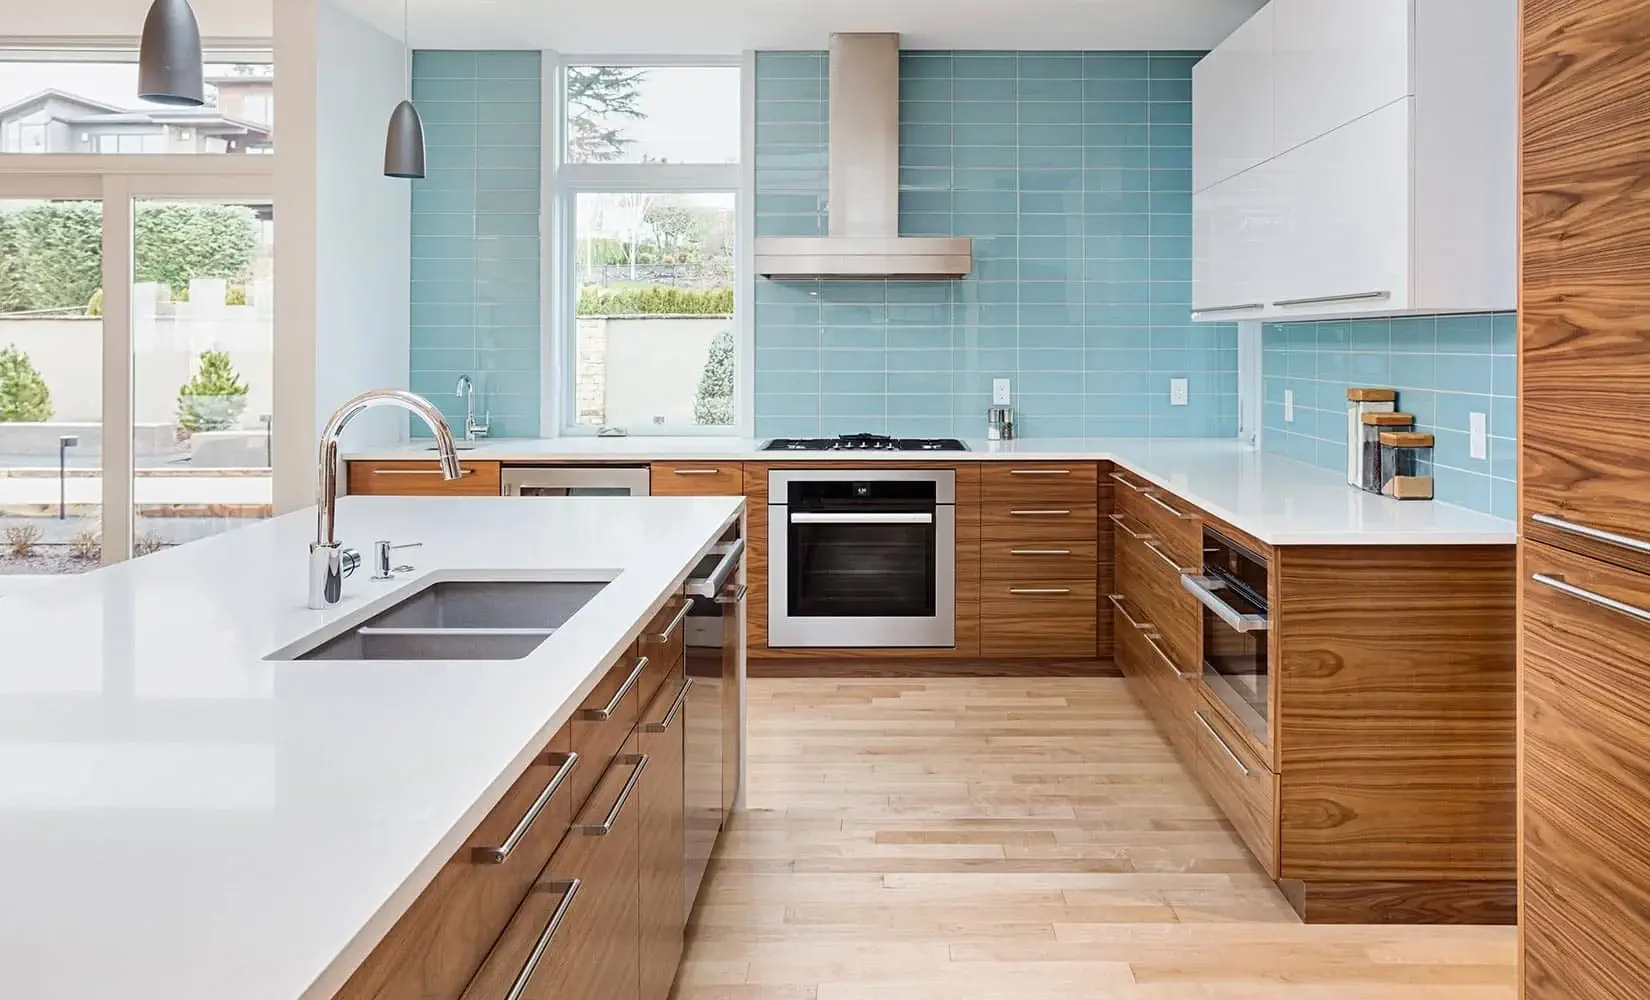 Kitchen with blue tile backsplash and faux wood melamine cabinets.